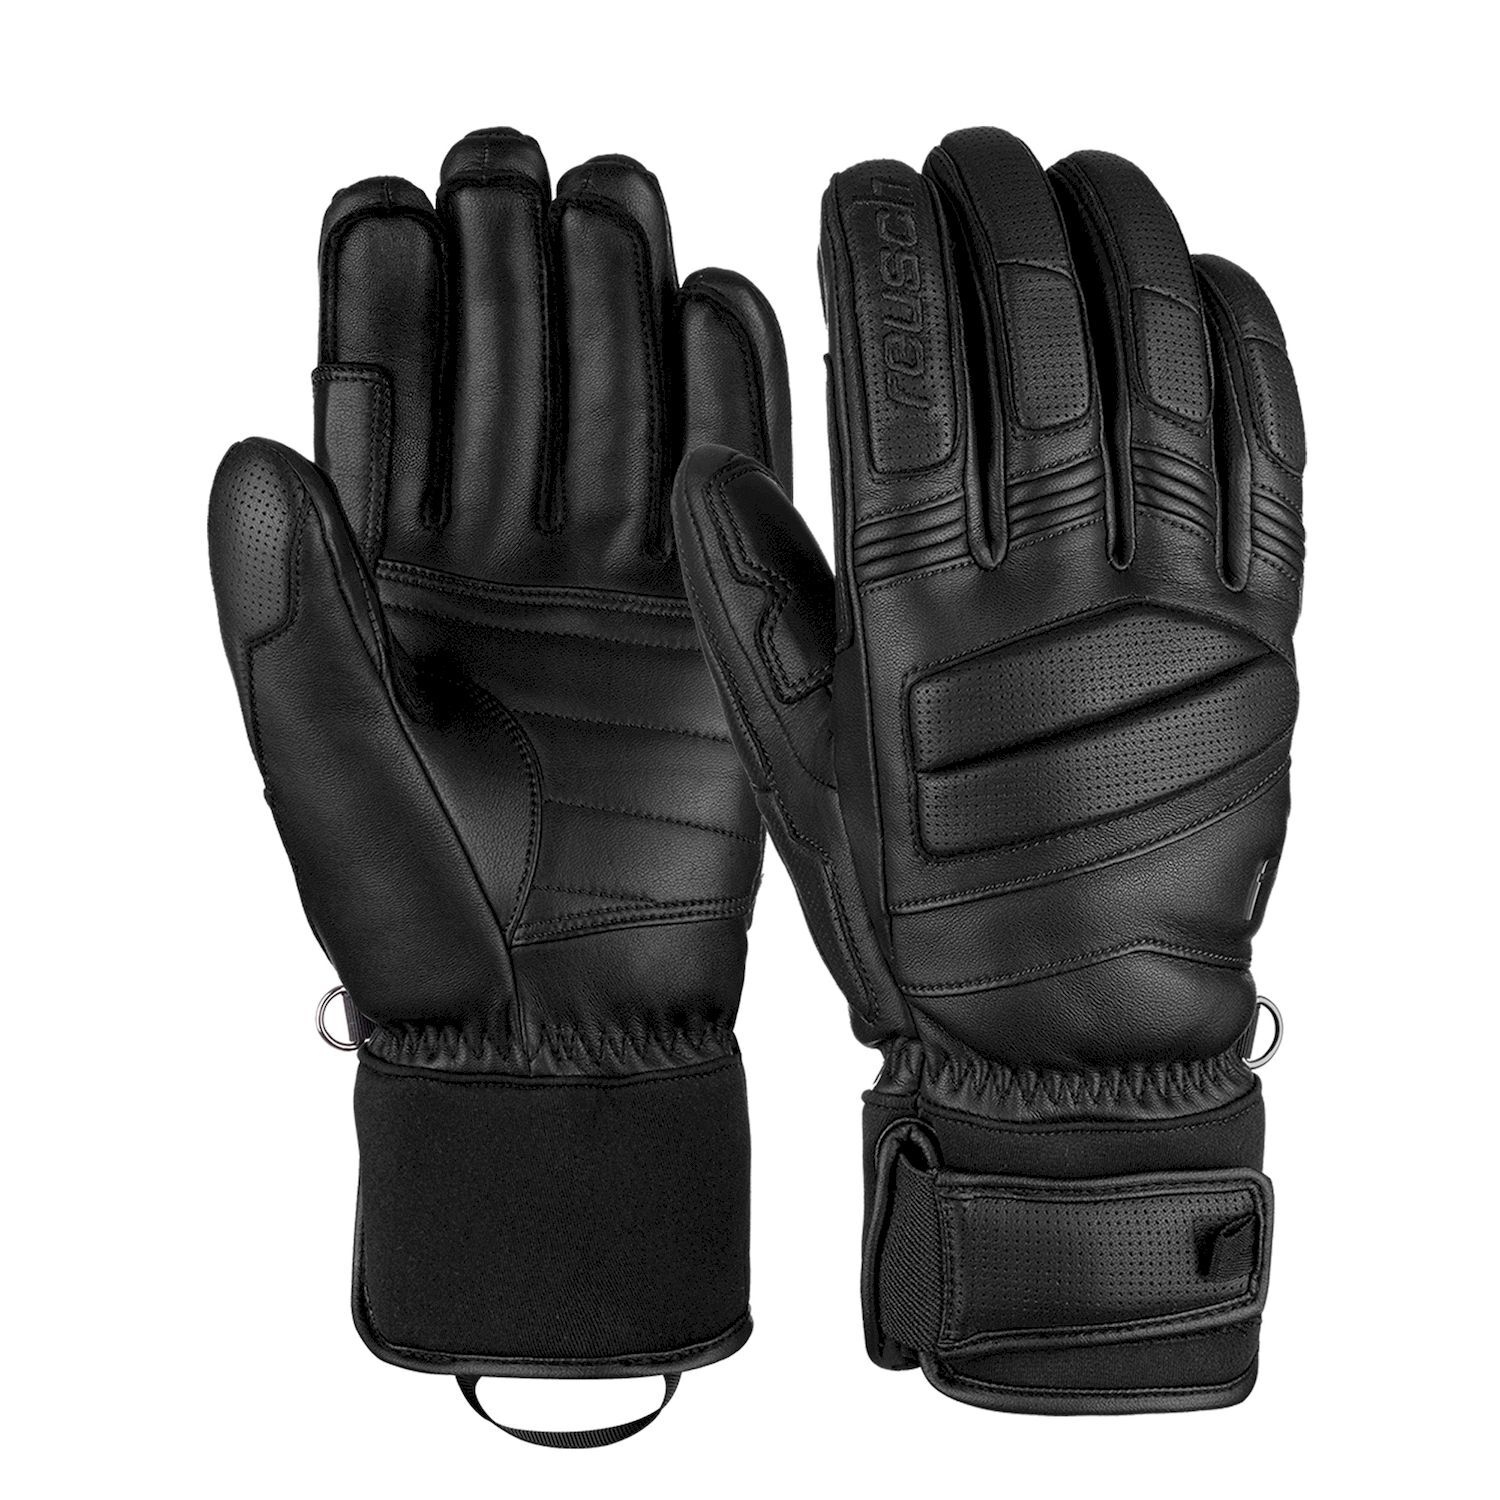 Reusch Master Pro - Ski gloves - Men's